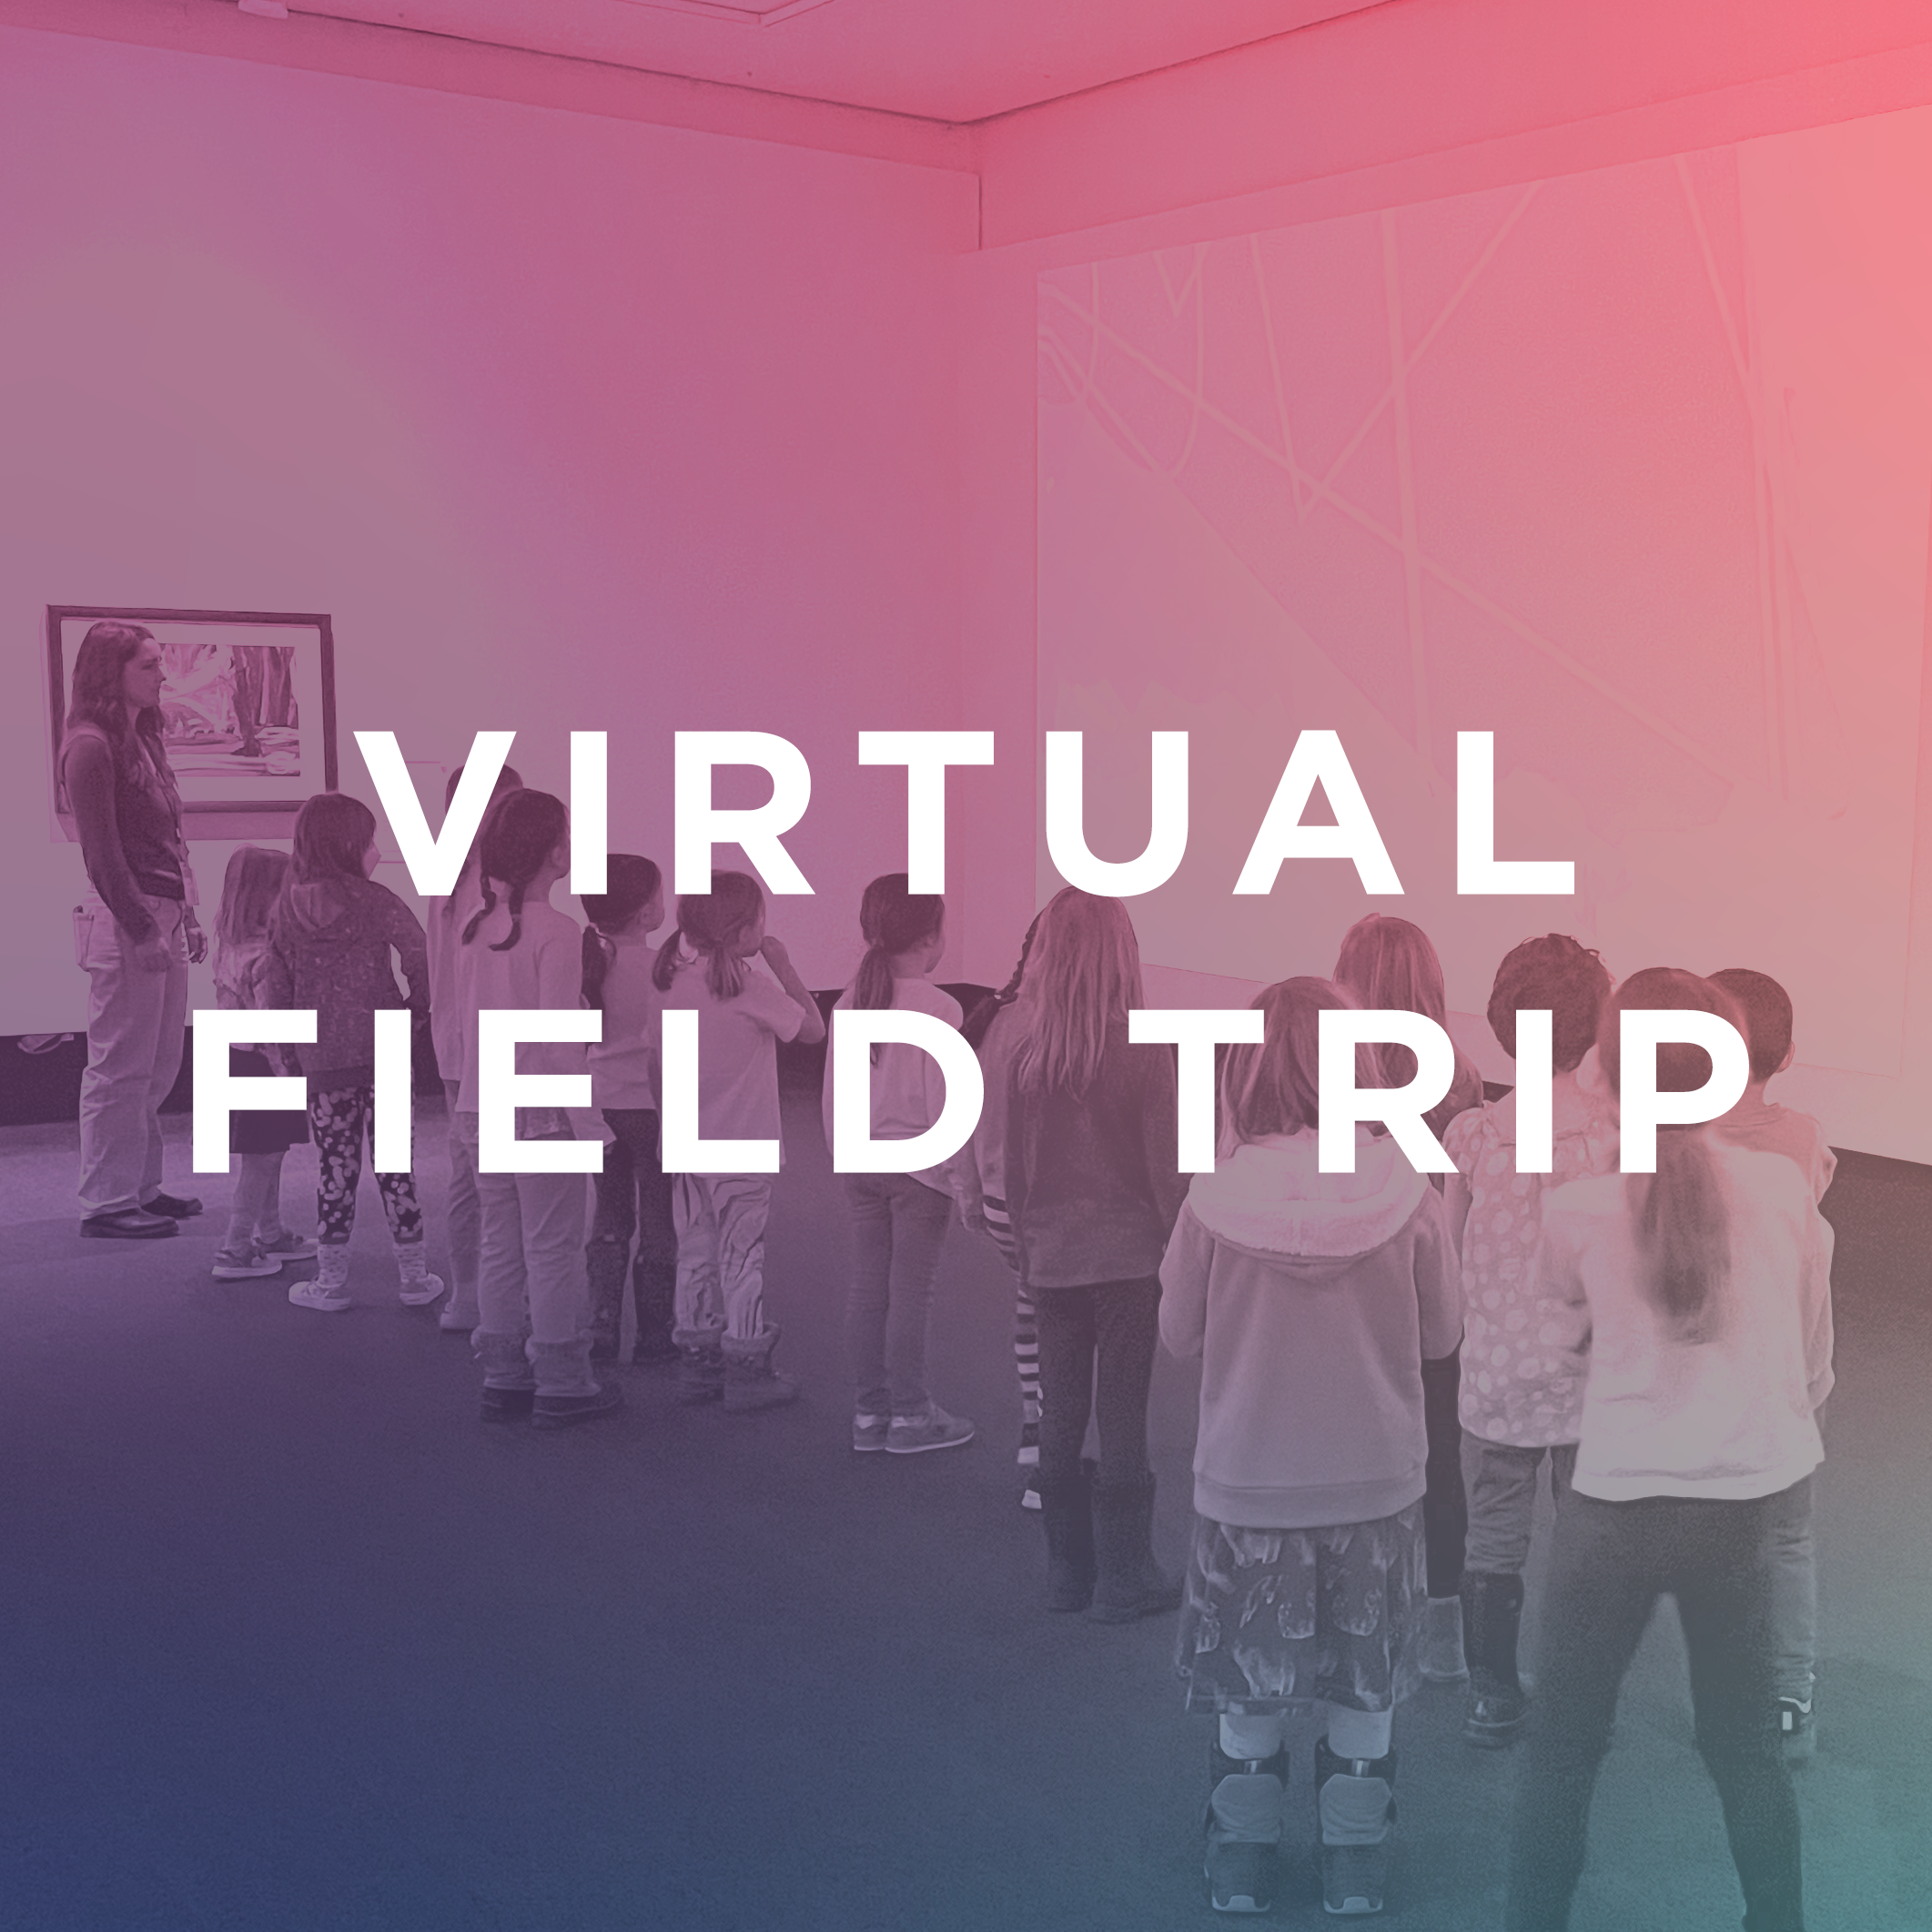 art gallery virtual field trip